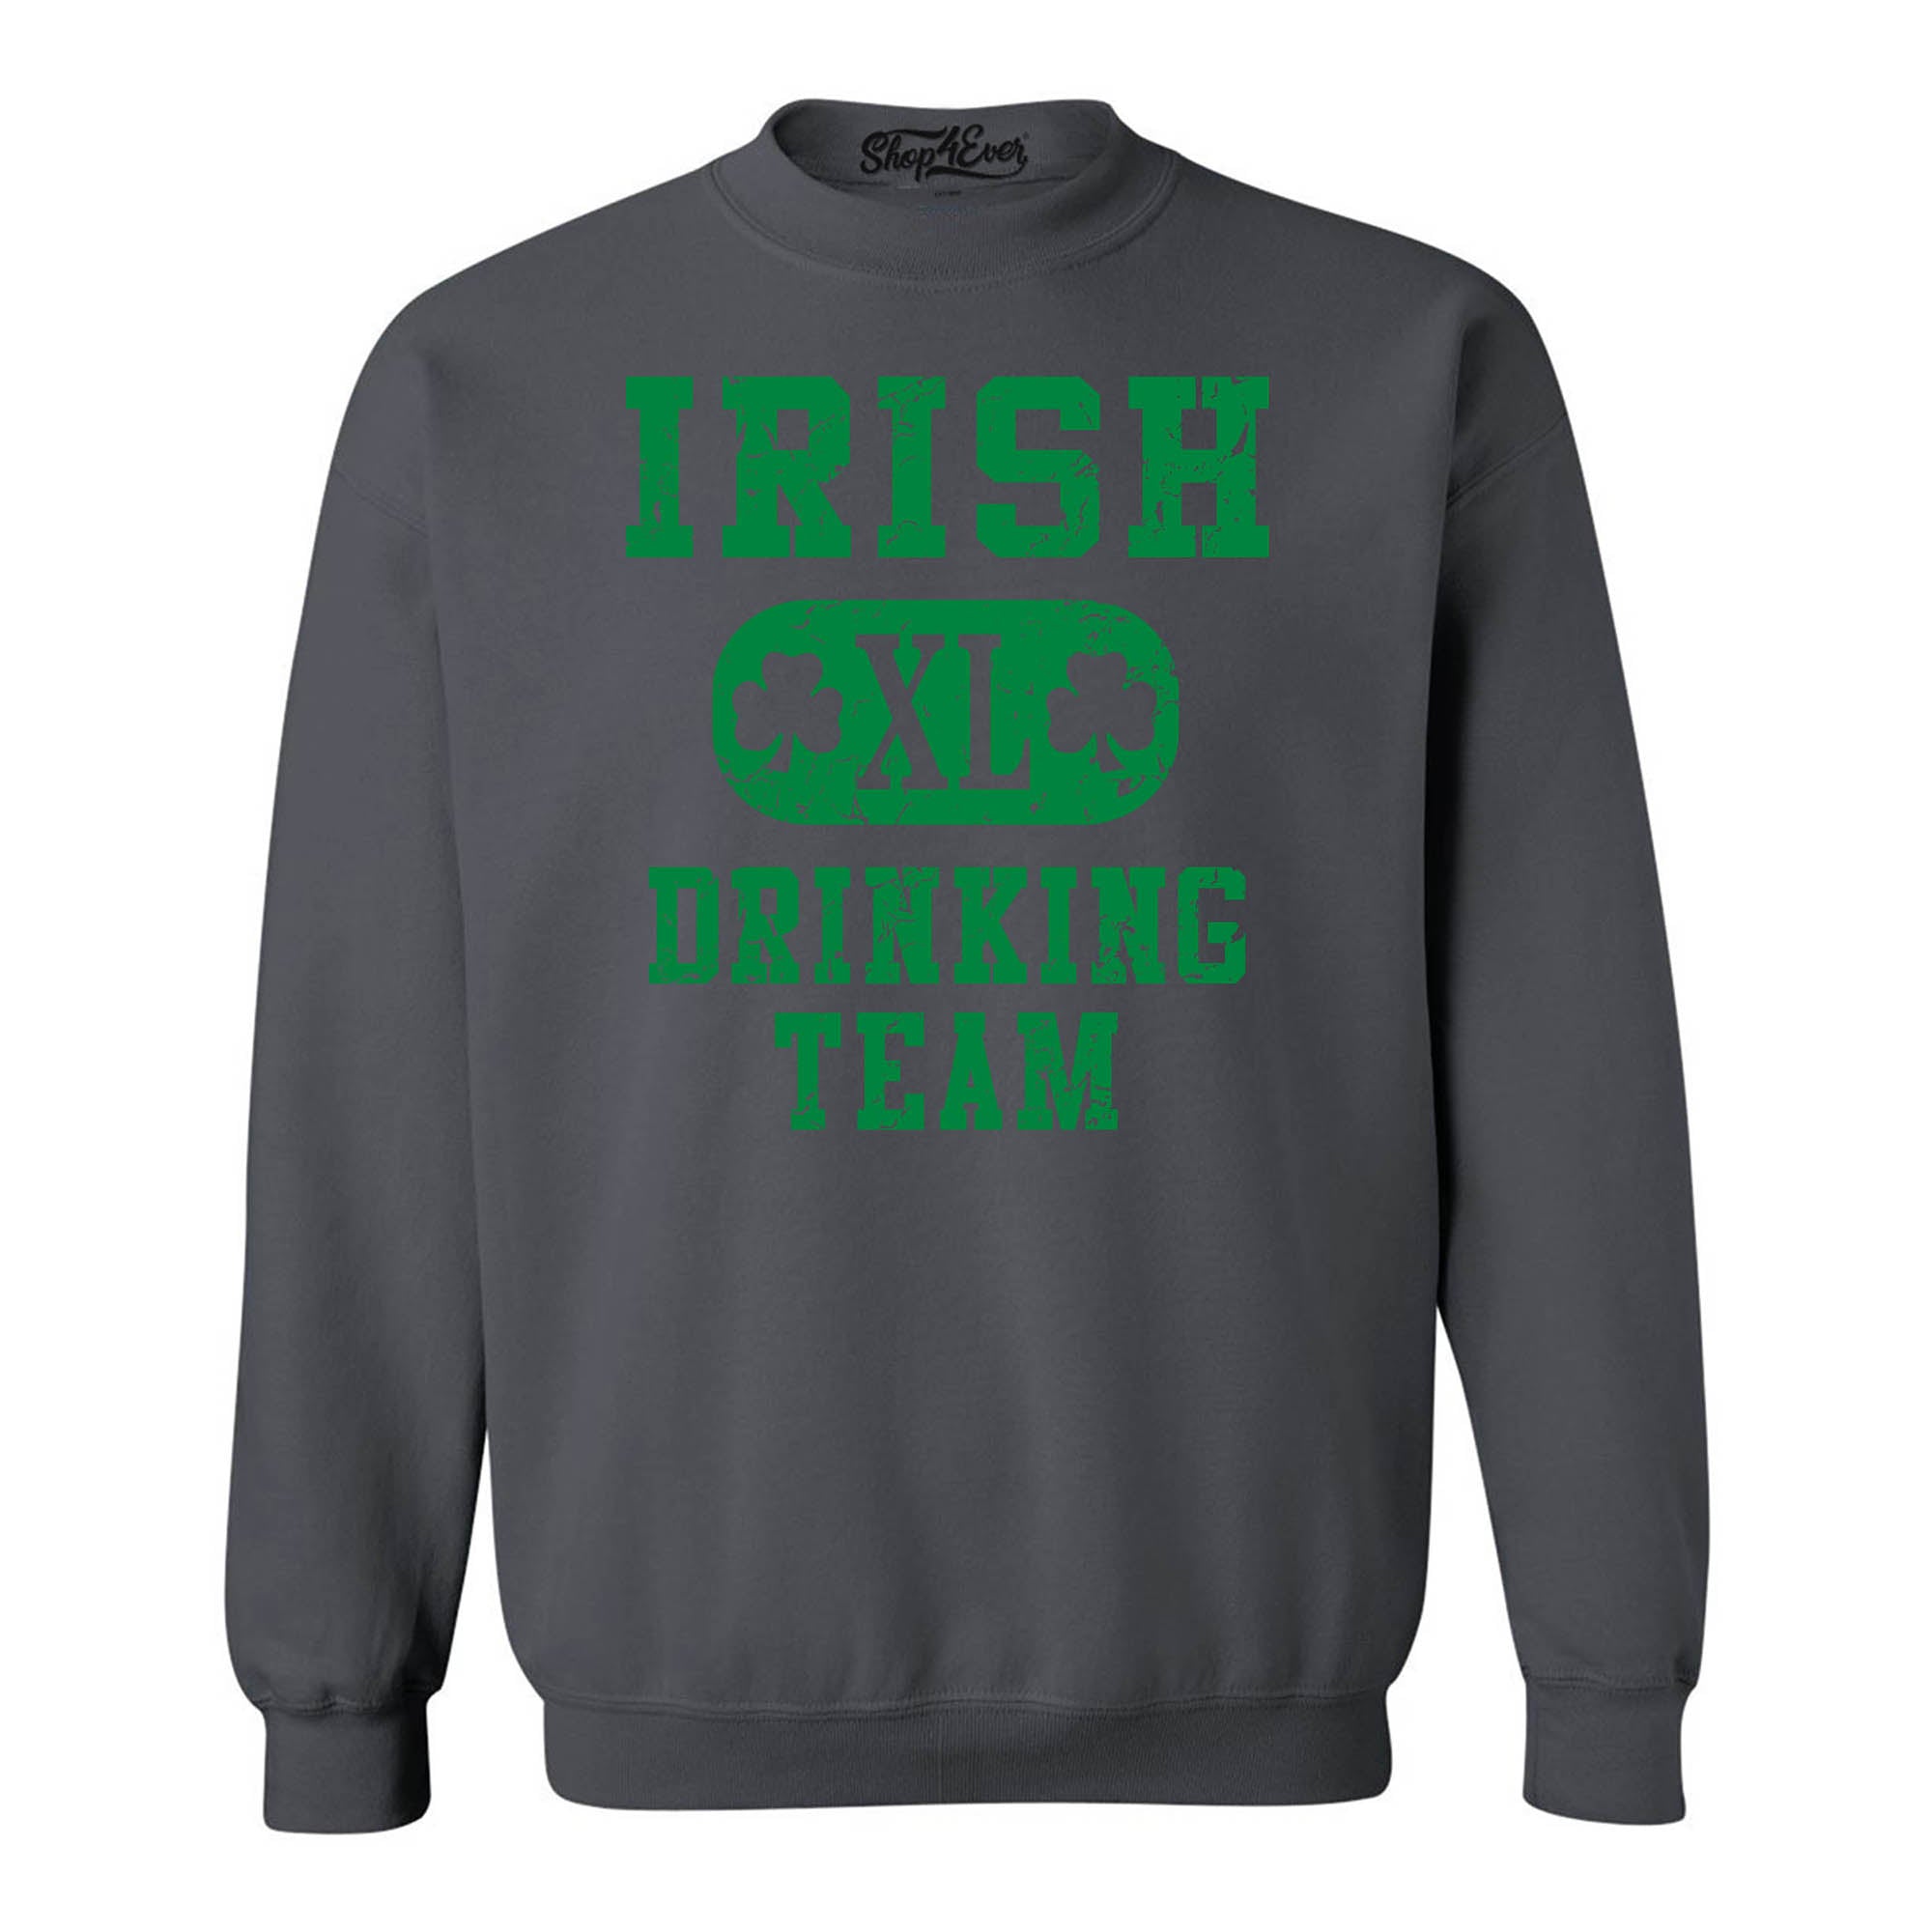 Irish Drinking Team Crewnecks St. Patricks Day Sweatshirts